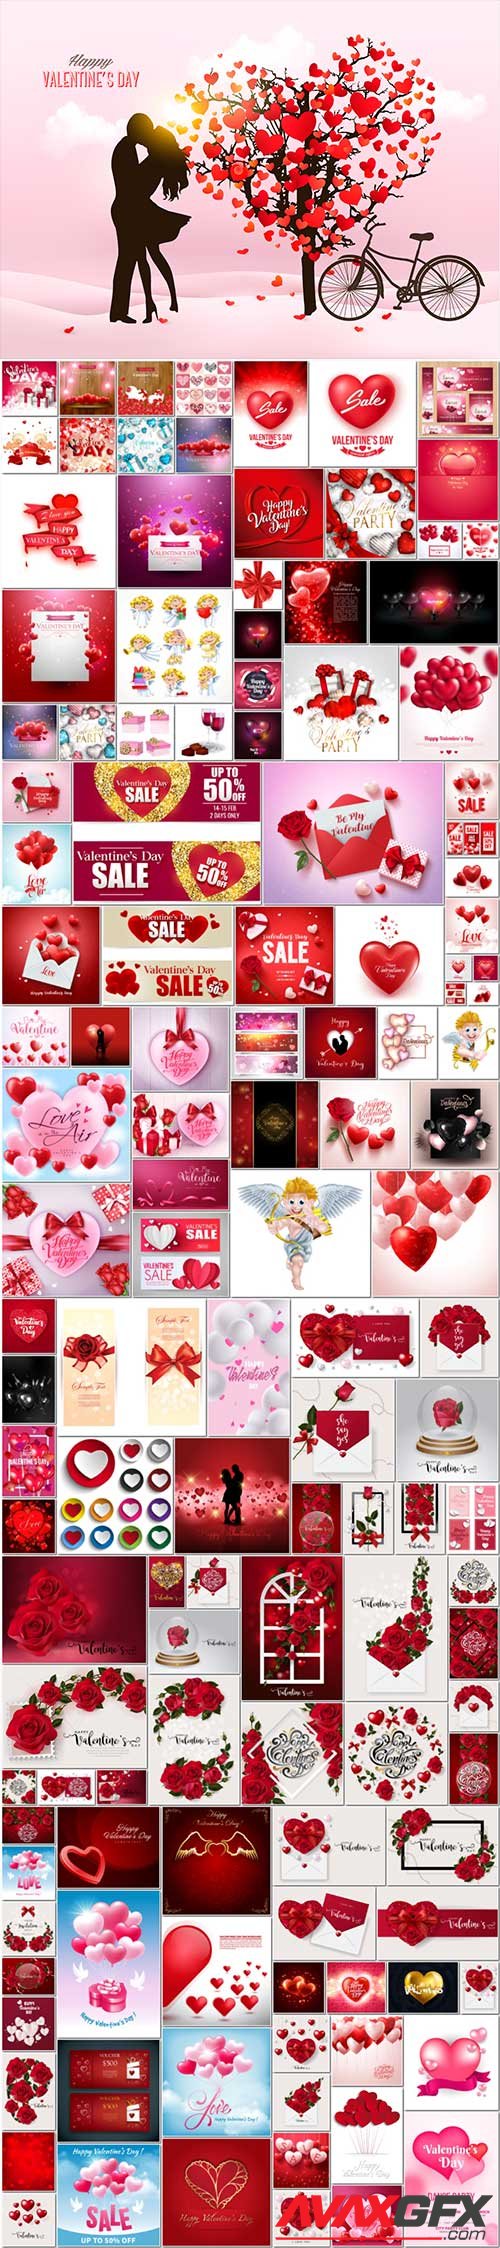 1500 Happy Valentines Day vector illustrations